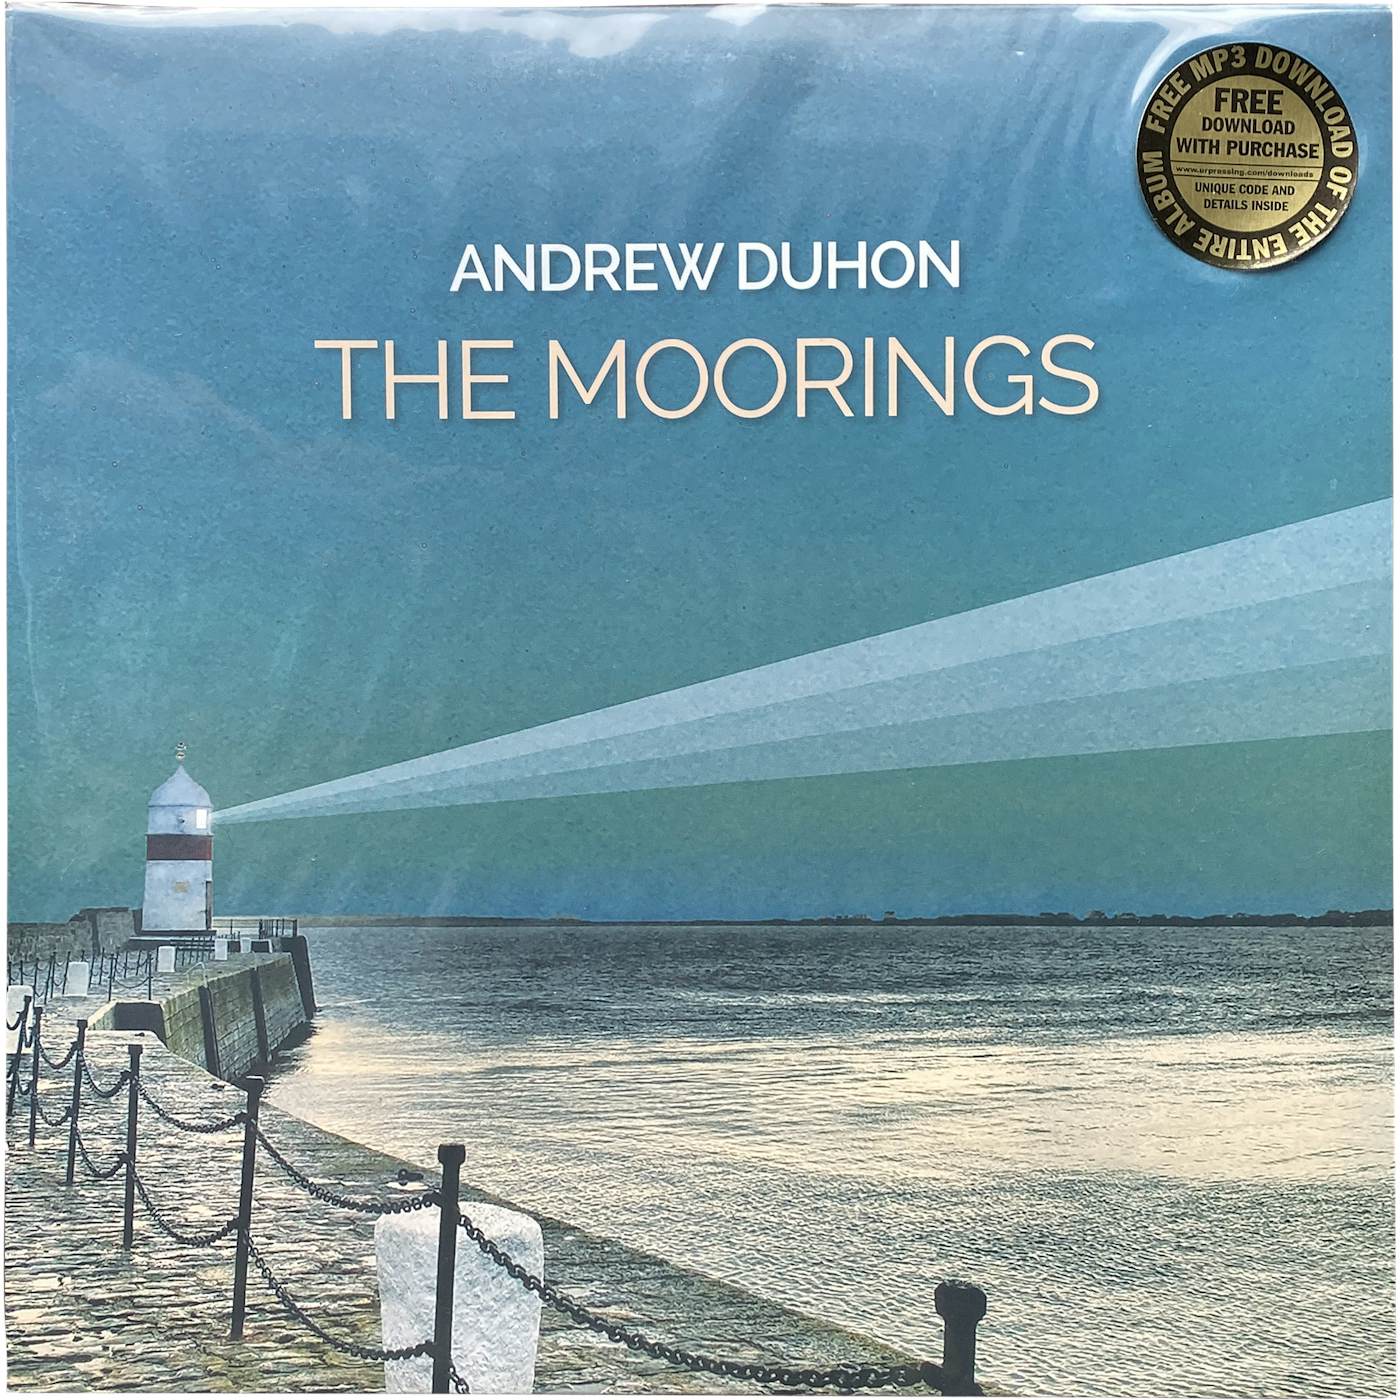 Andrew Duhon Vinyl Record - The Moorings